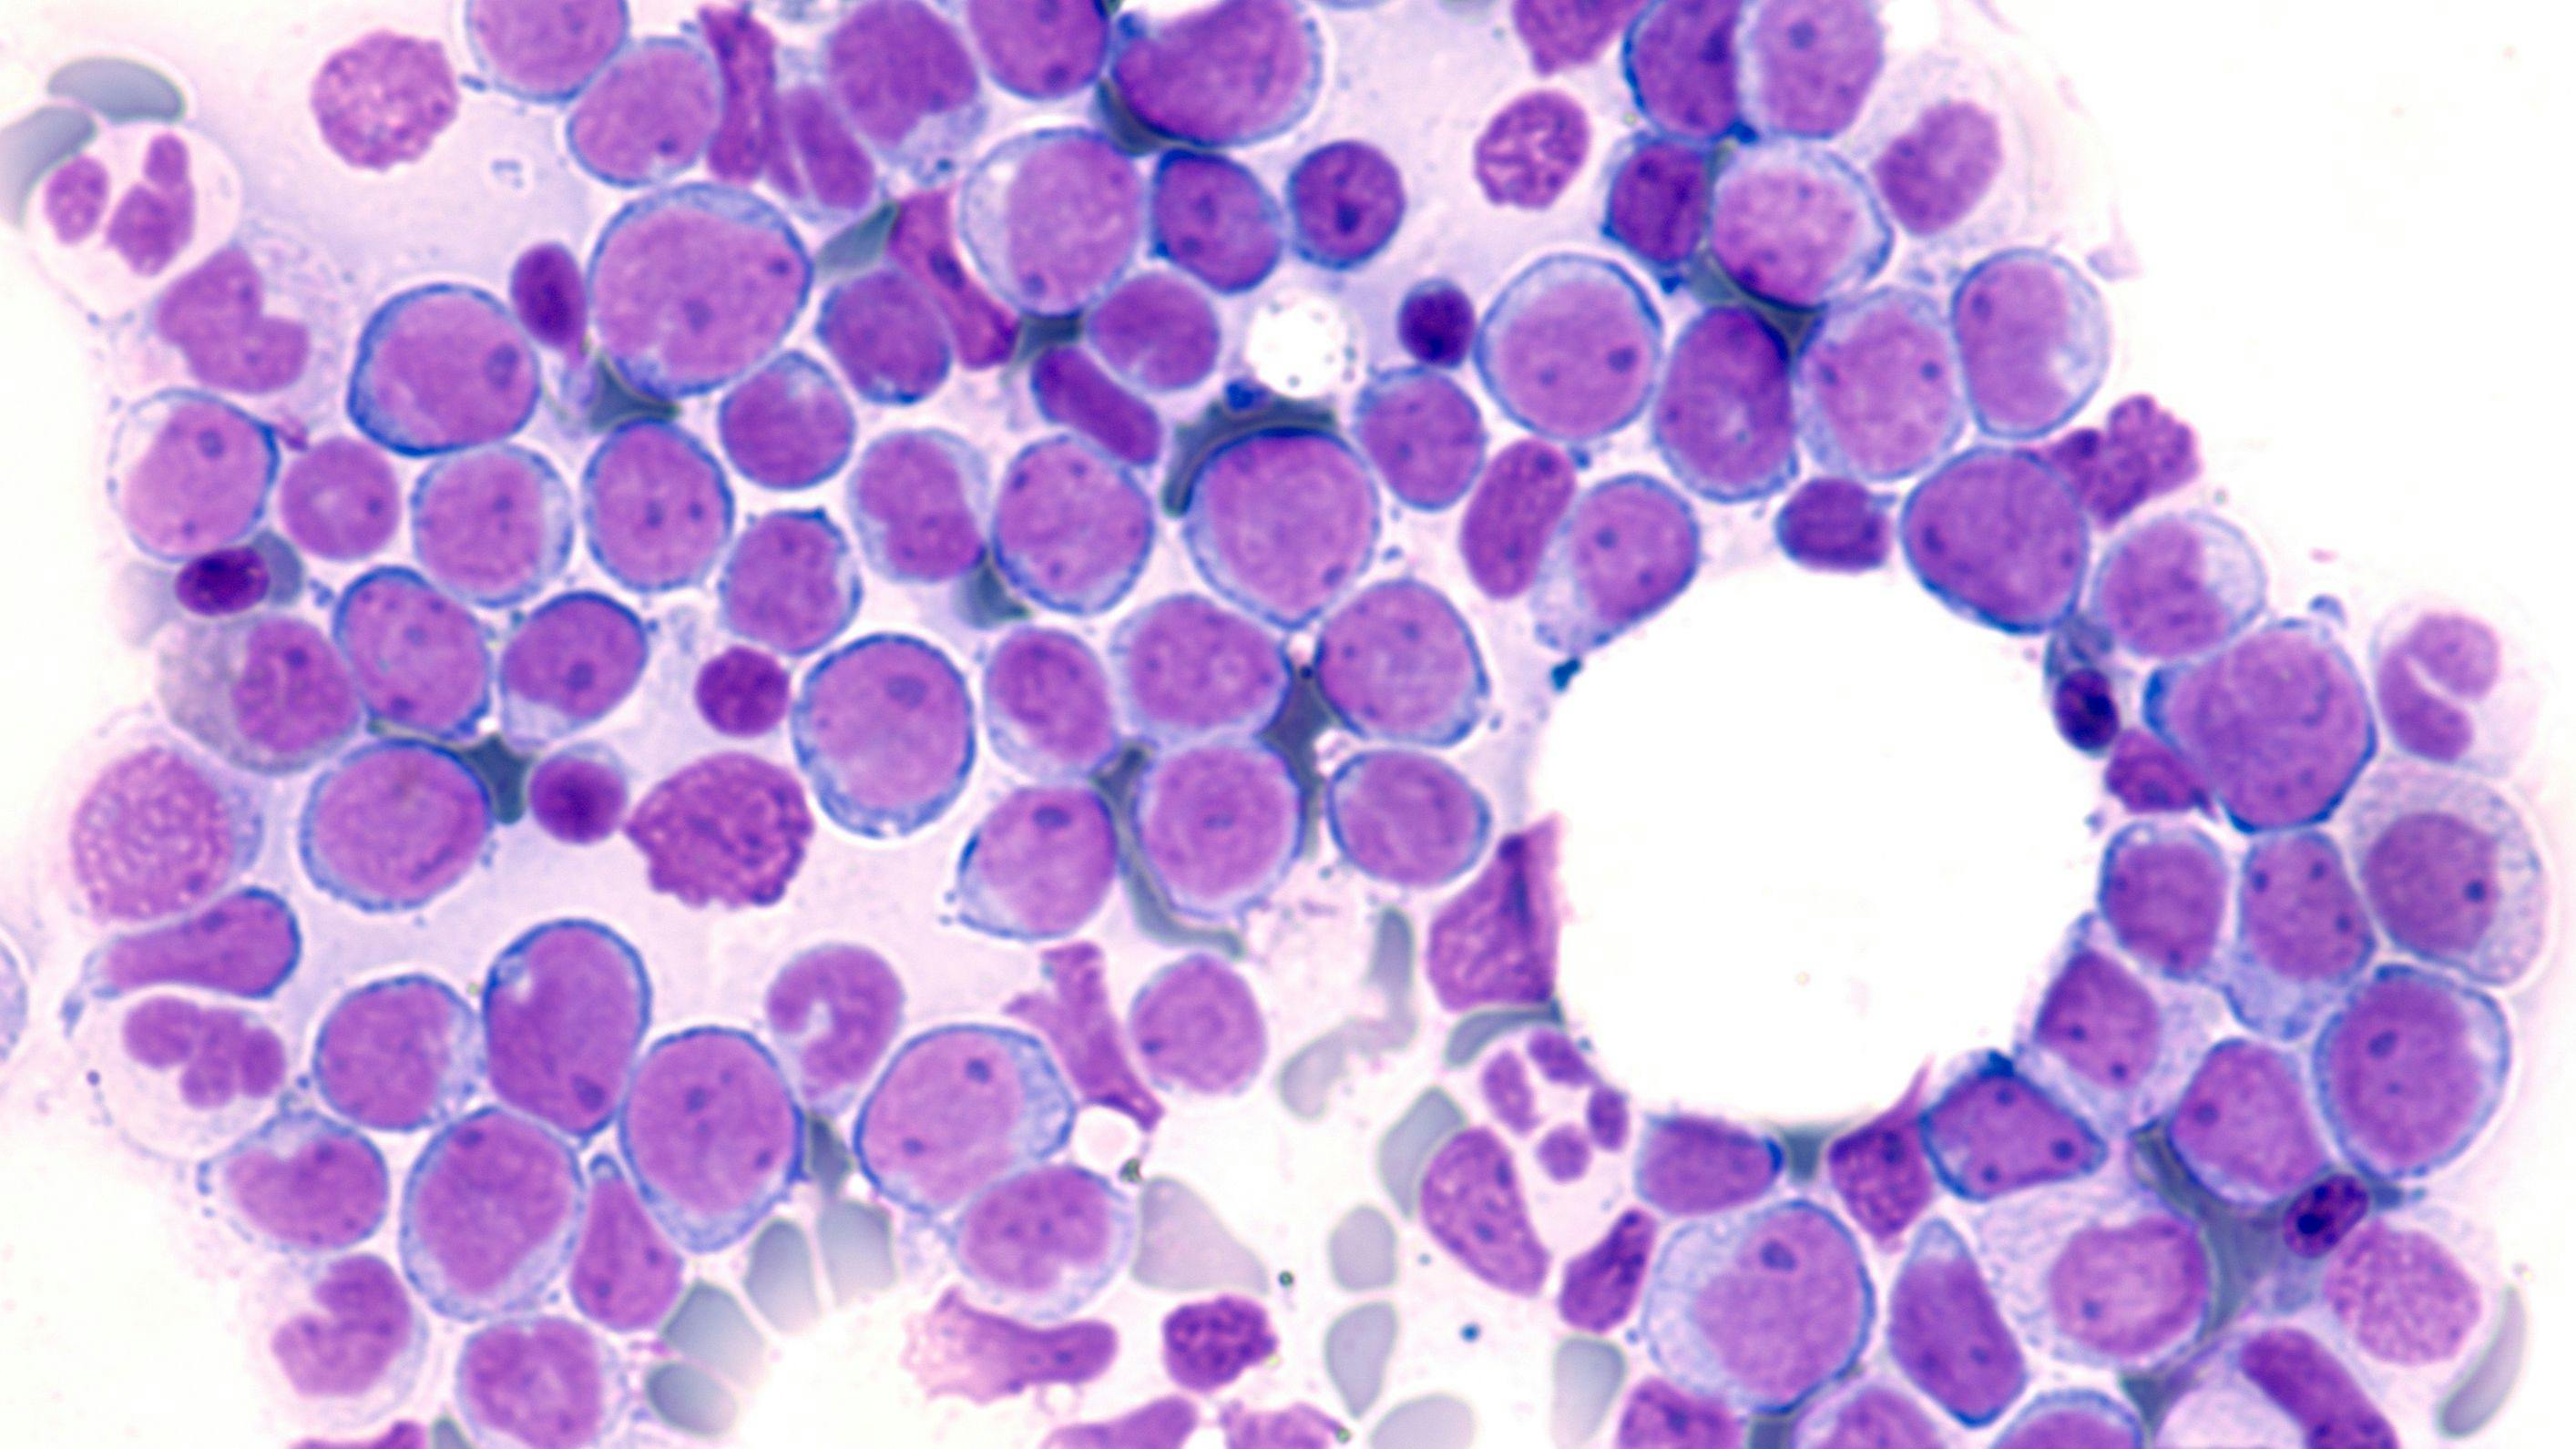 Acute myeloid leukemia -- Image credit: David A Litman | stock.adobe.com 